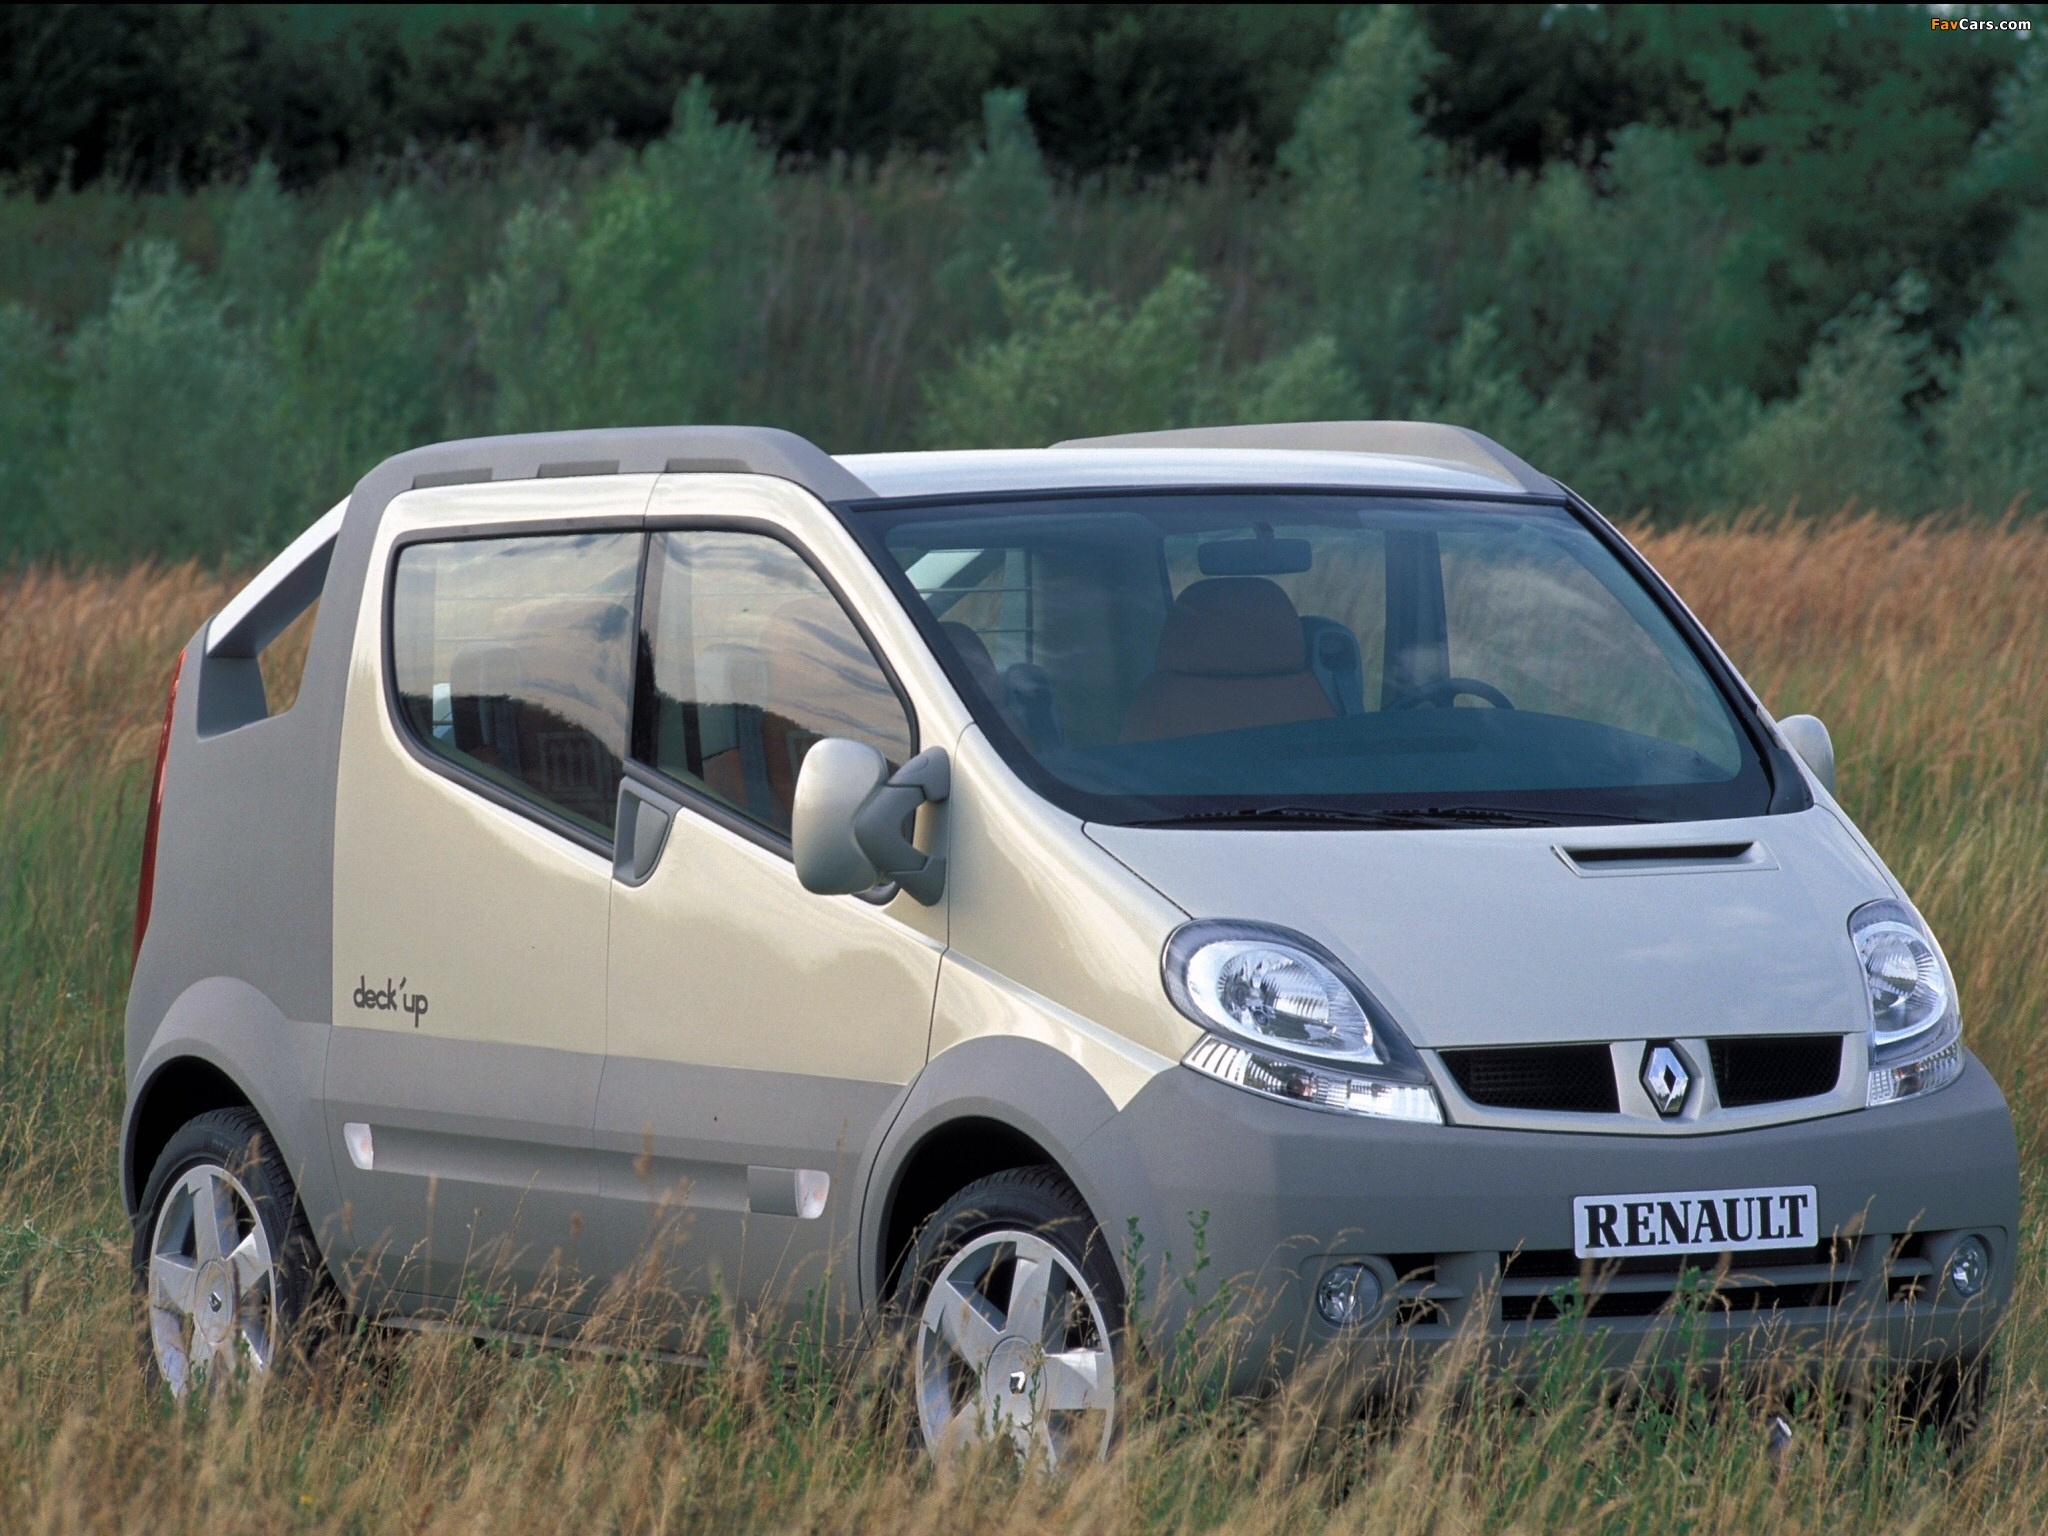 Renault Trafic Deckup Concept 2004 pictures (2048 x 1536)